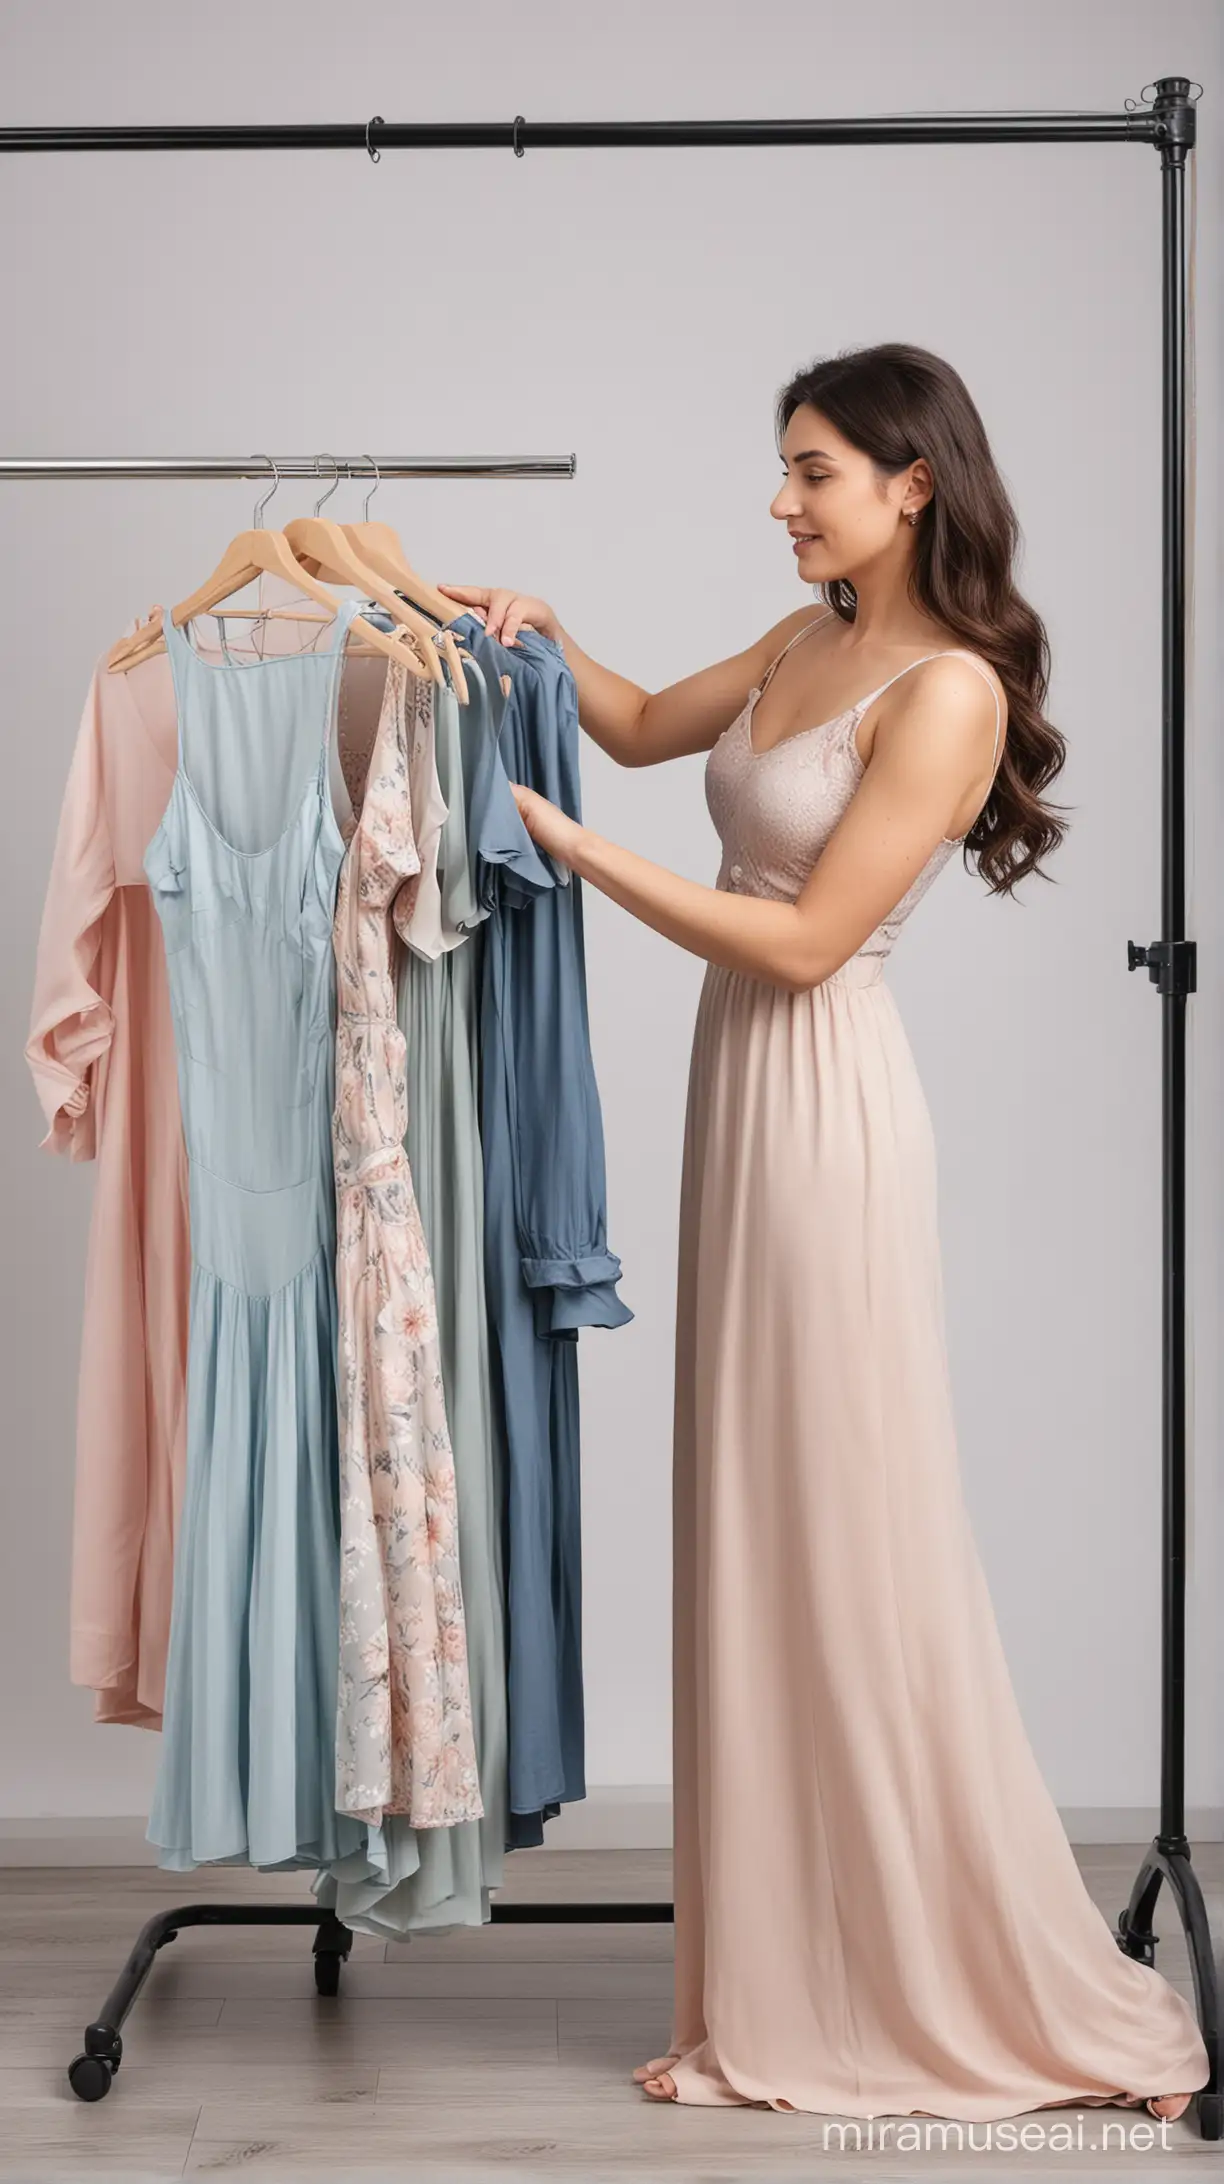 Elegant Lady Selecting Dress at Photography Studio